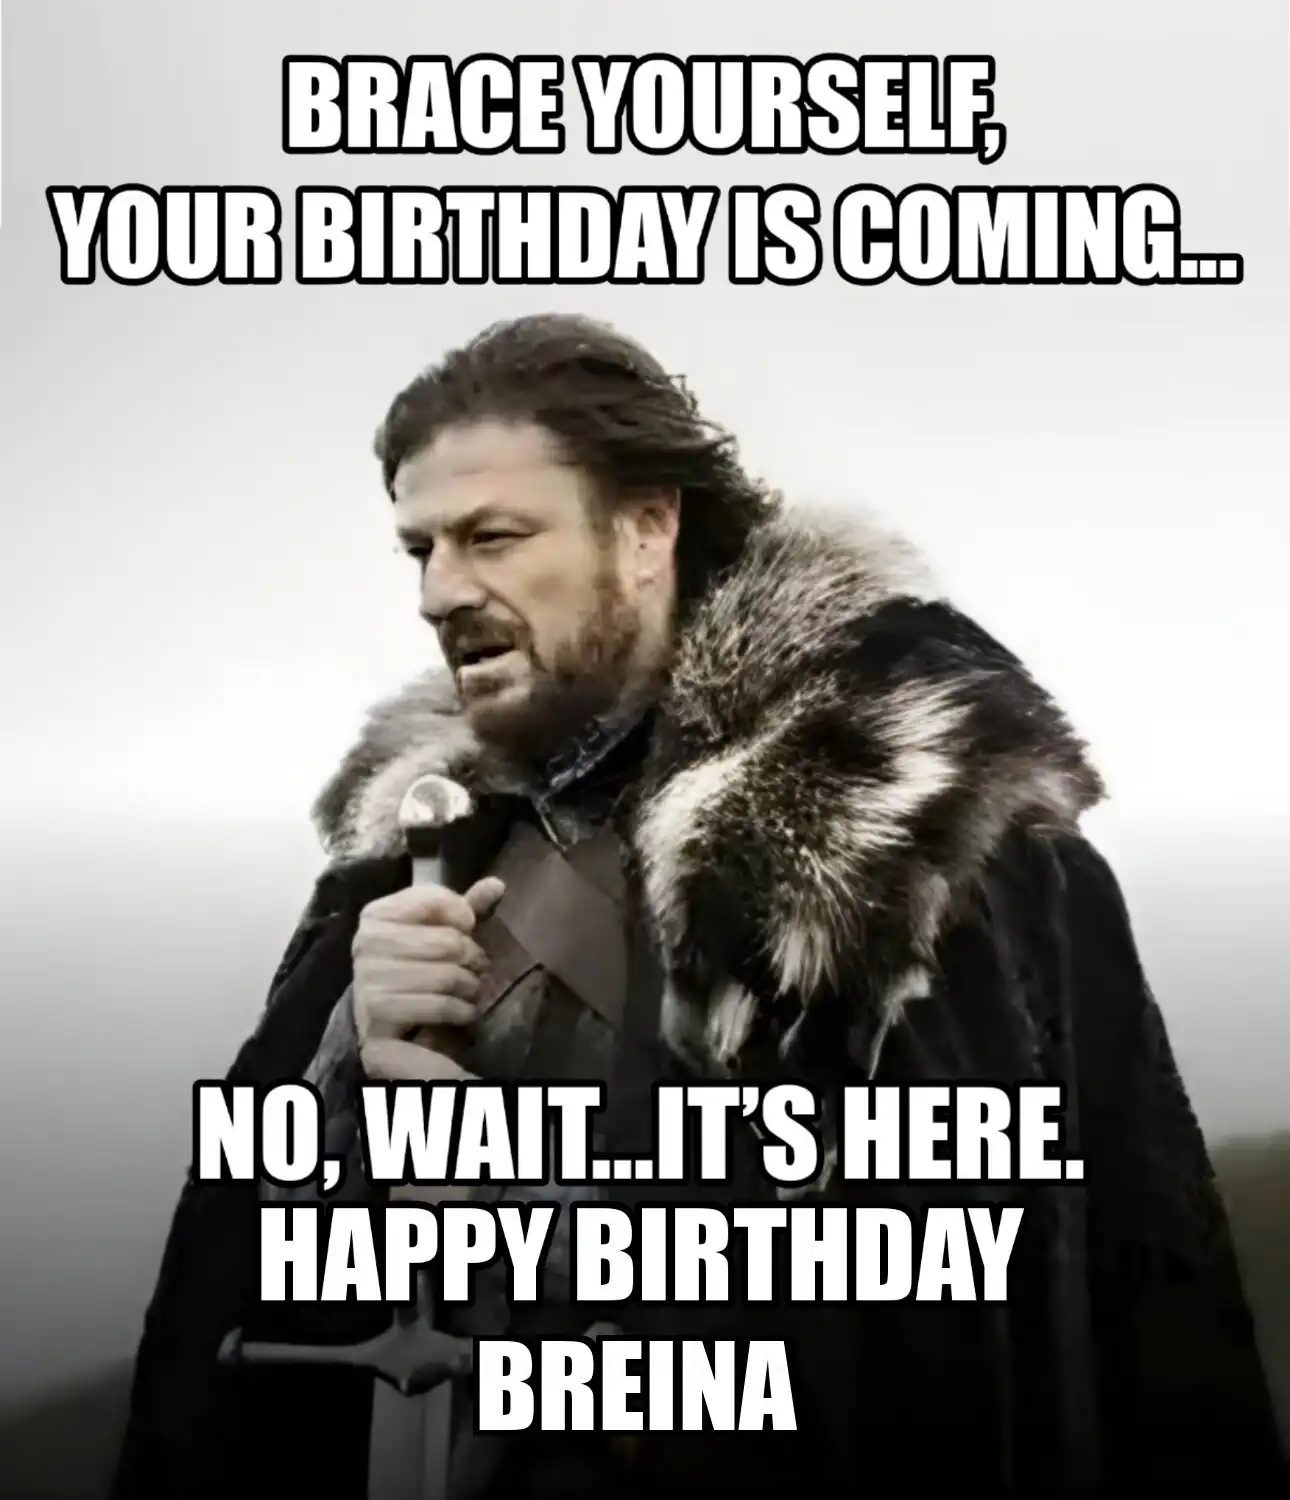 Happy Birthday Breina Brace Yourself Your Birthday Is Coming Meme